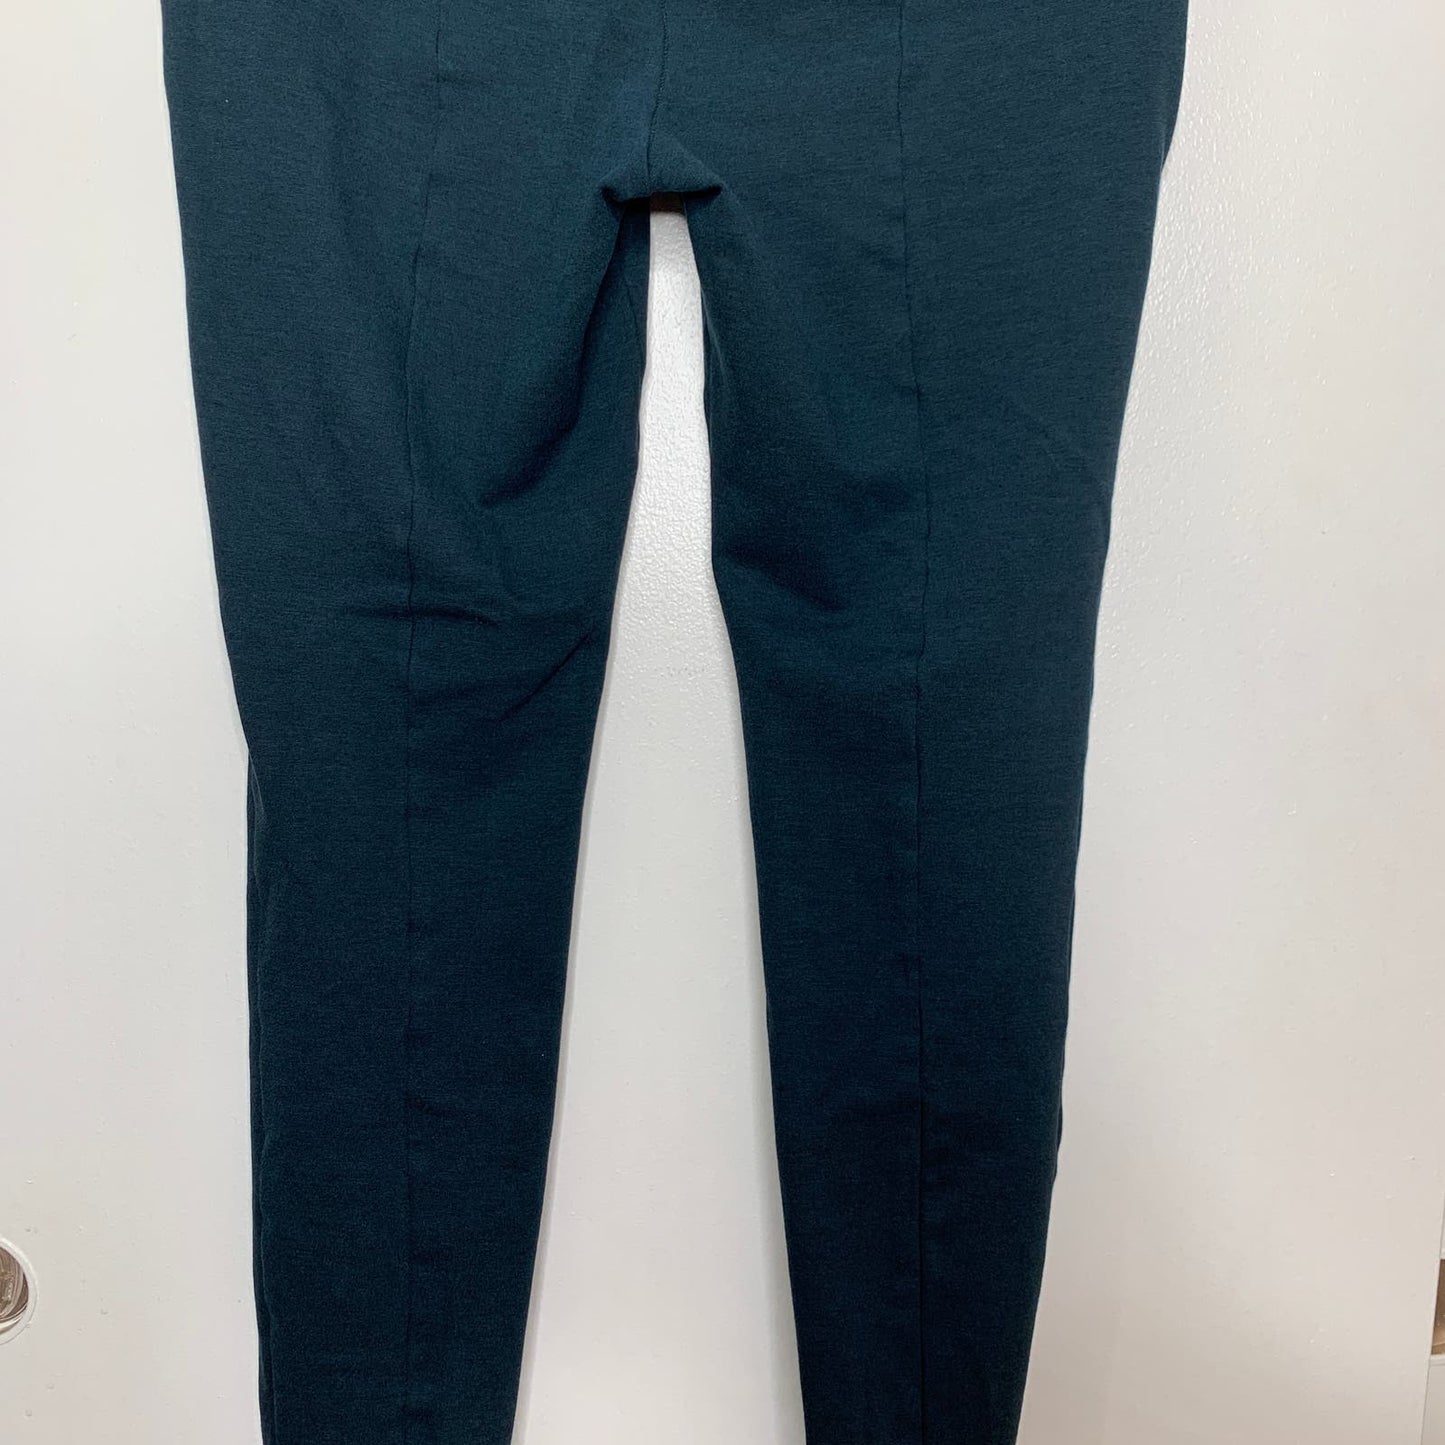 Teal ponte style seamed dress pants SZ 10 TALL